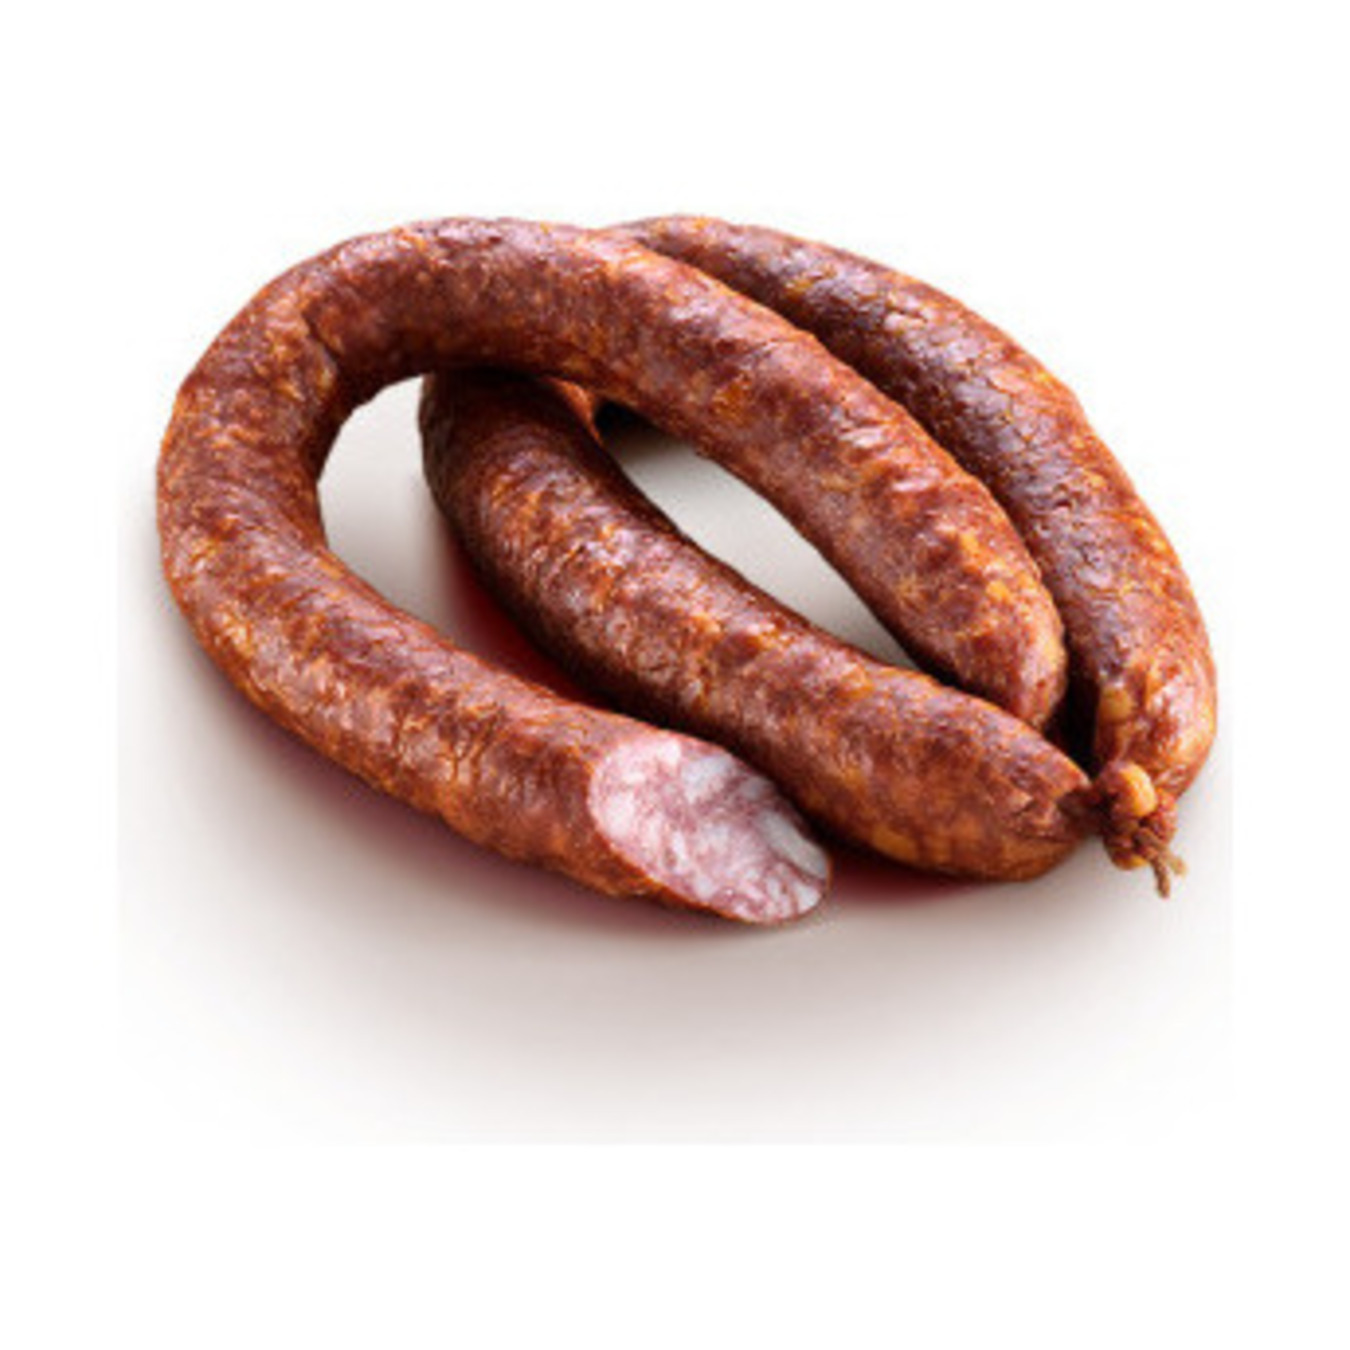 Sausage Ukrprompostach Krakow semi-smoked 